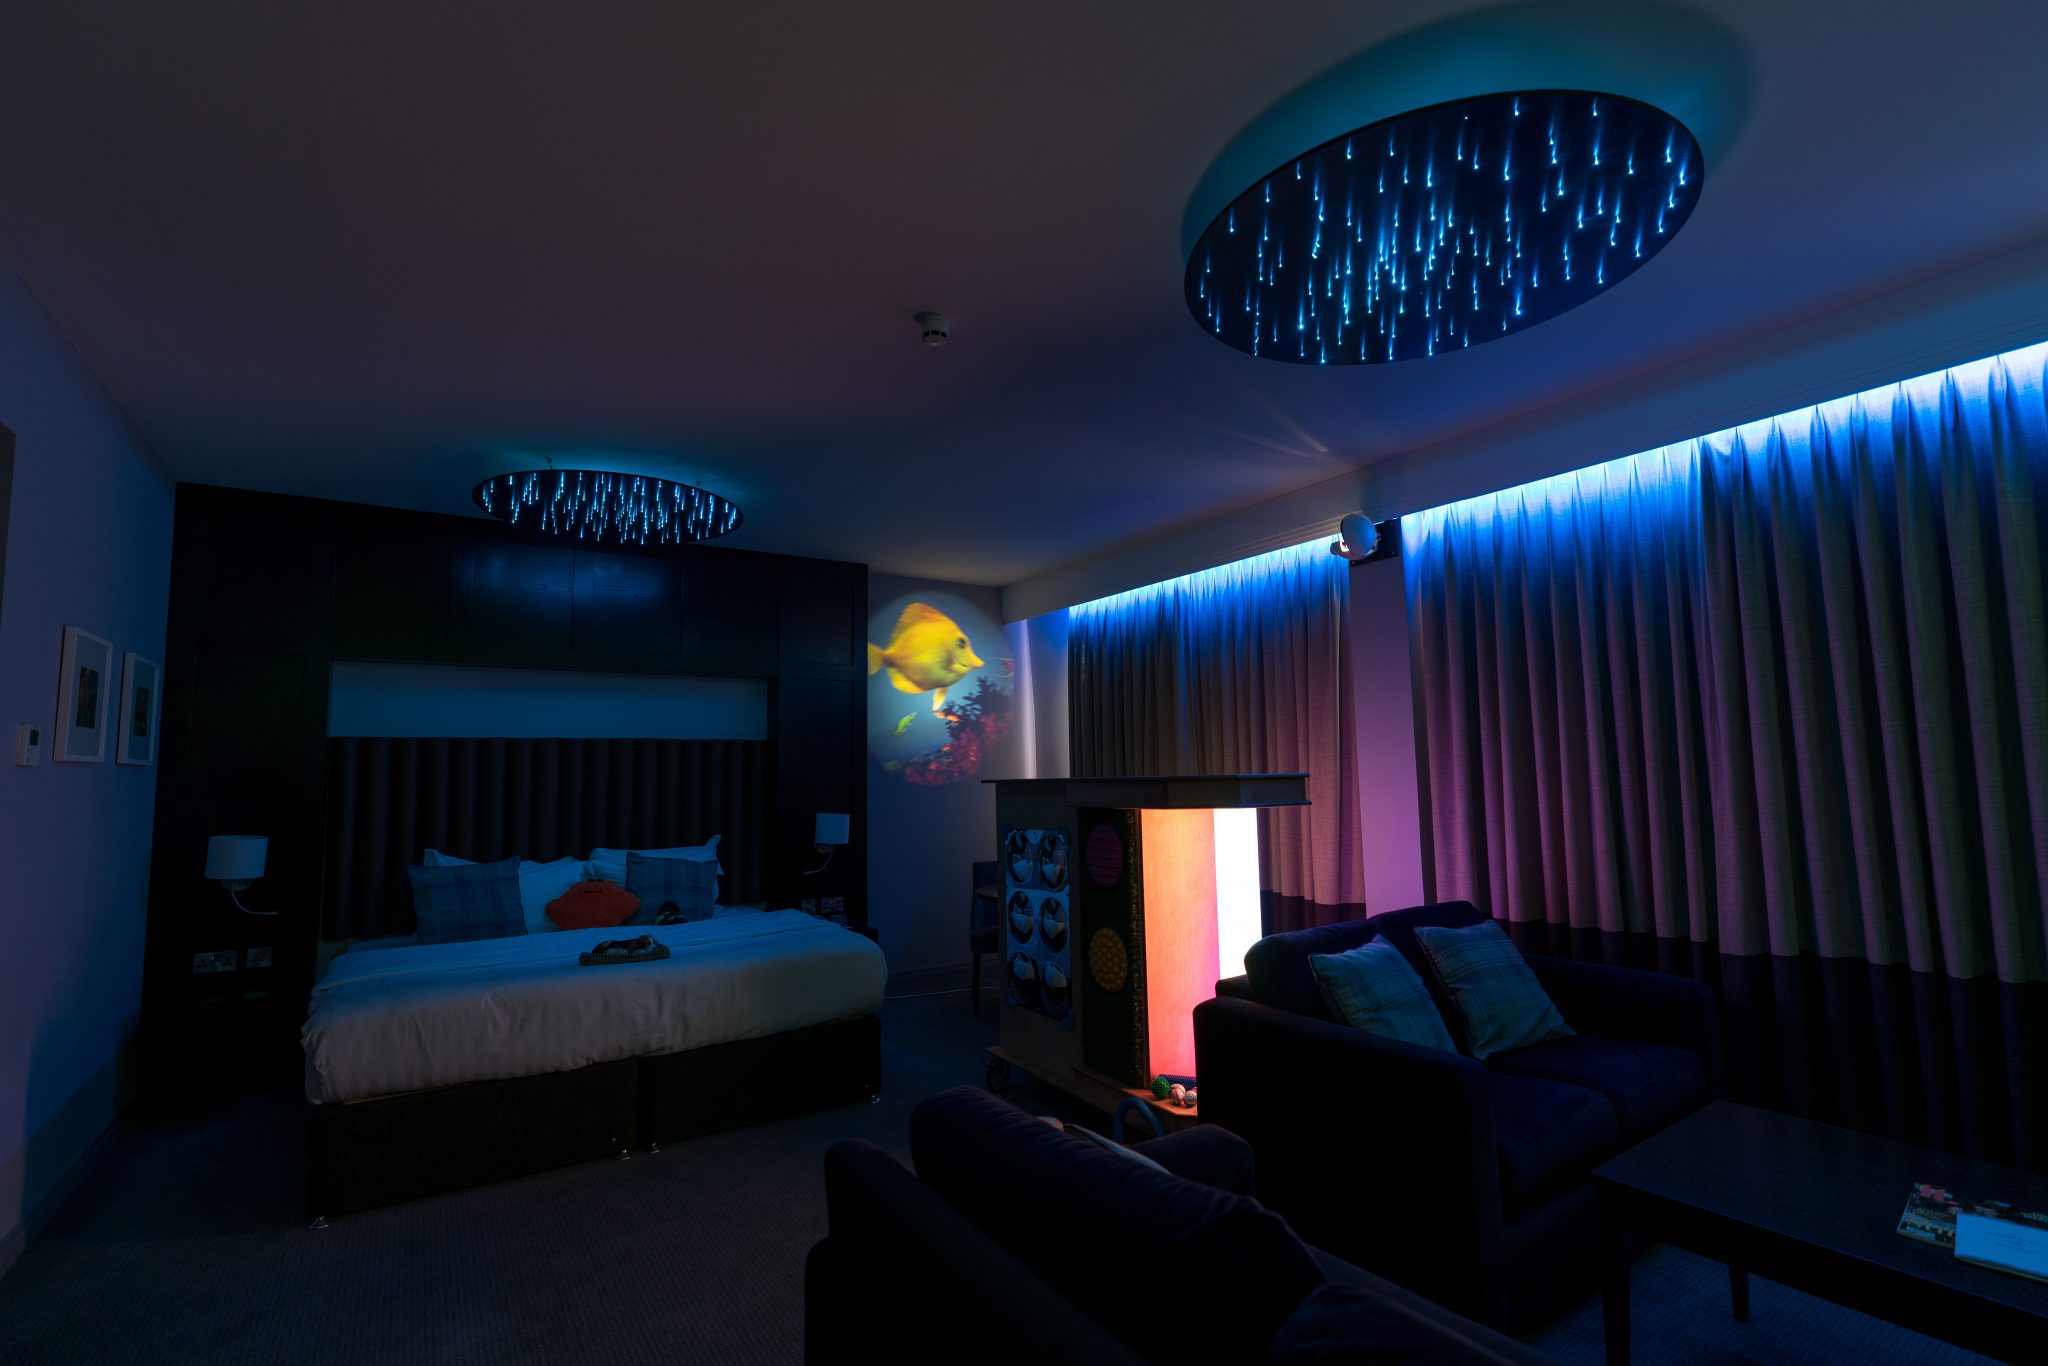 Radisson Blu Sligo becomes the first Irish hotel to introduce a sensory bedroom